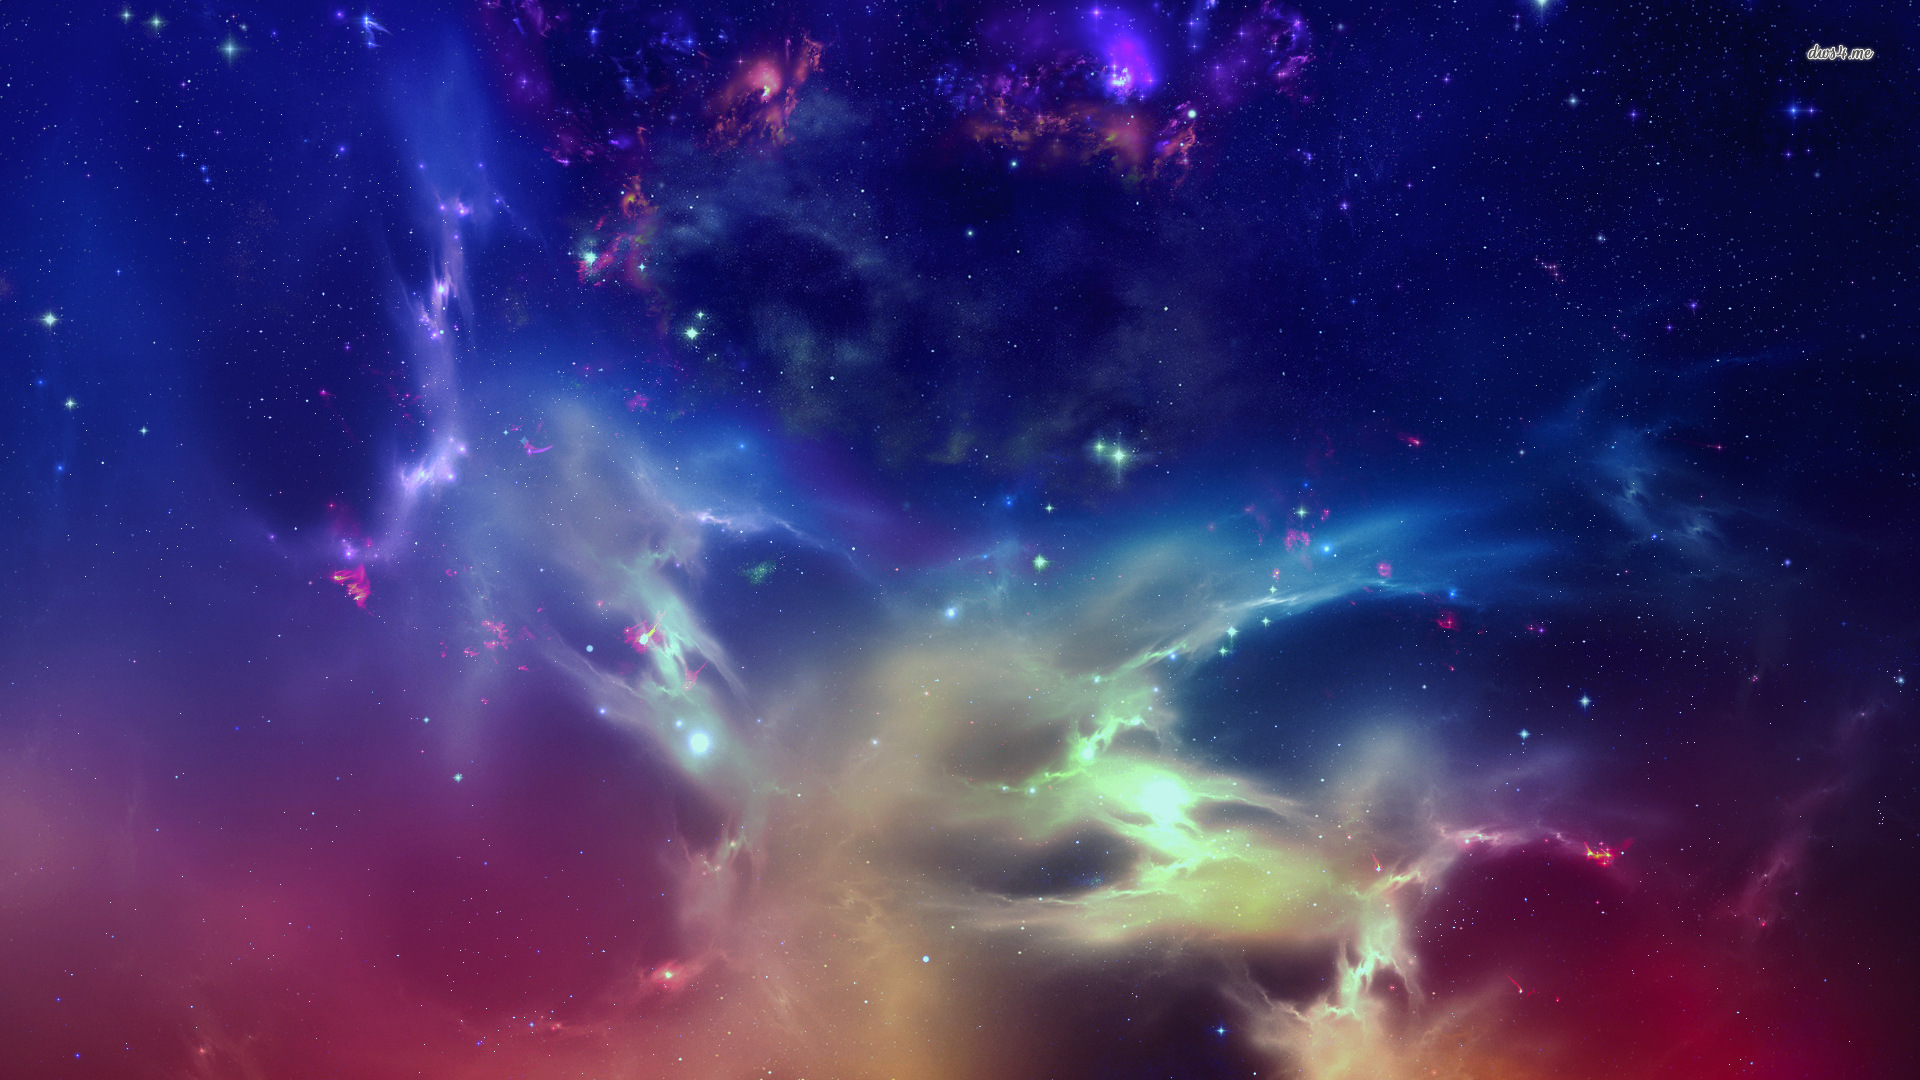 android n wallpaper 1080p,himmel,nebel,atmosphäre,weltraum,astronomisches objekt